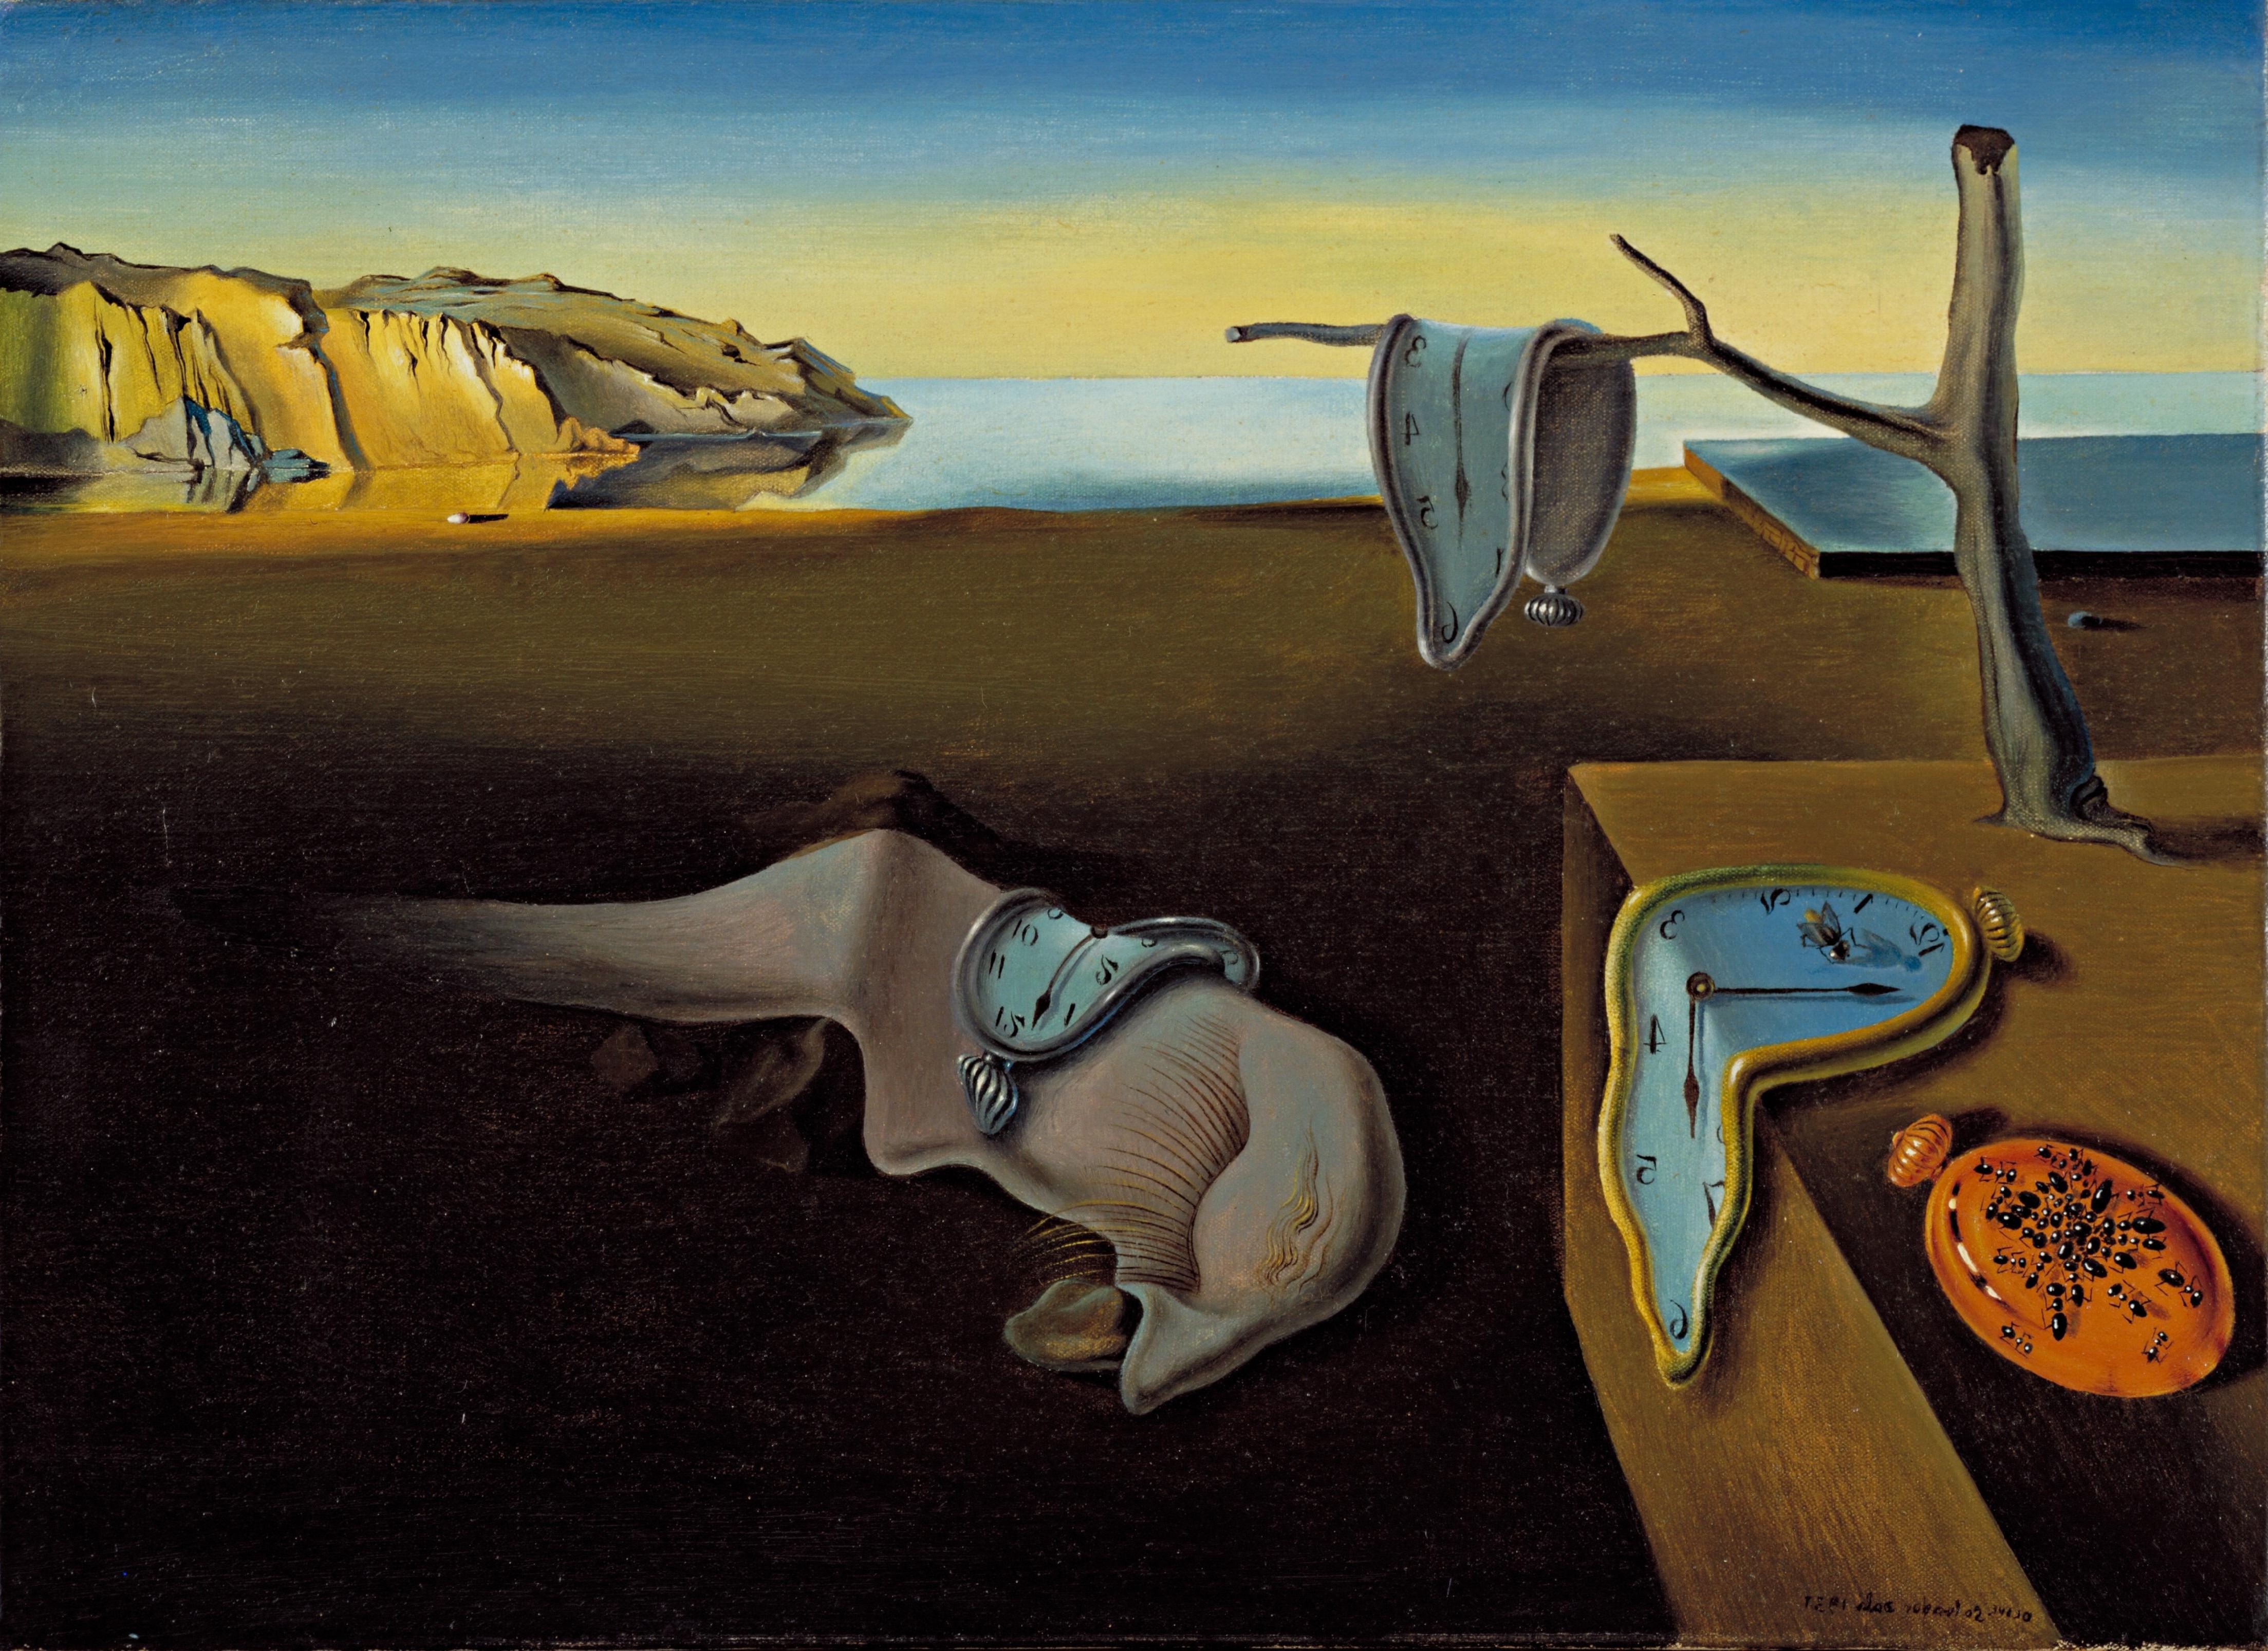 Salvador Dalí, Painting, Surreal, Classic Art, Melting, Clocks ...